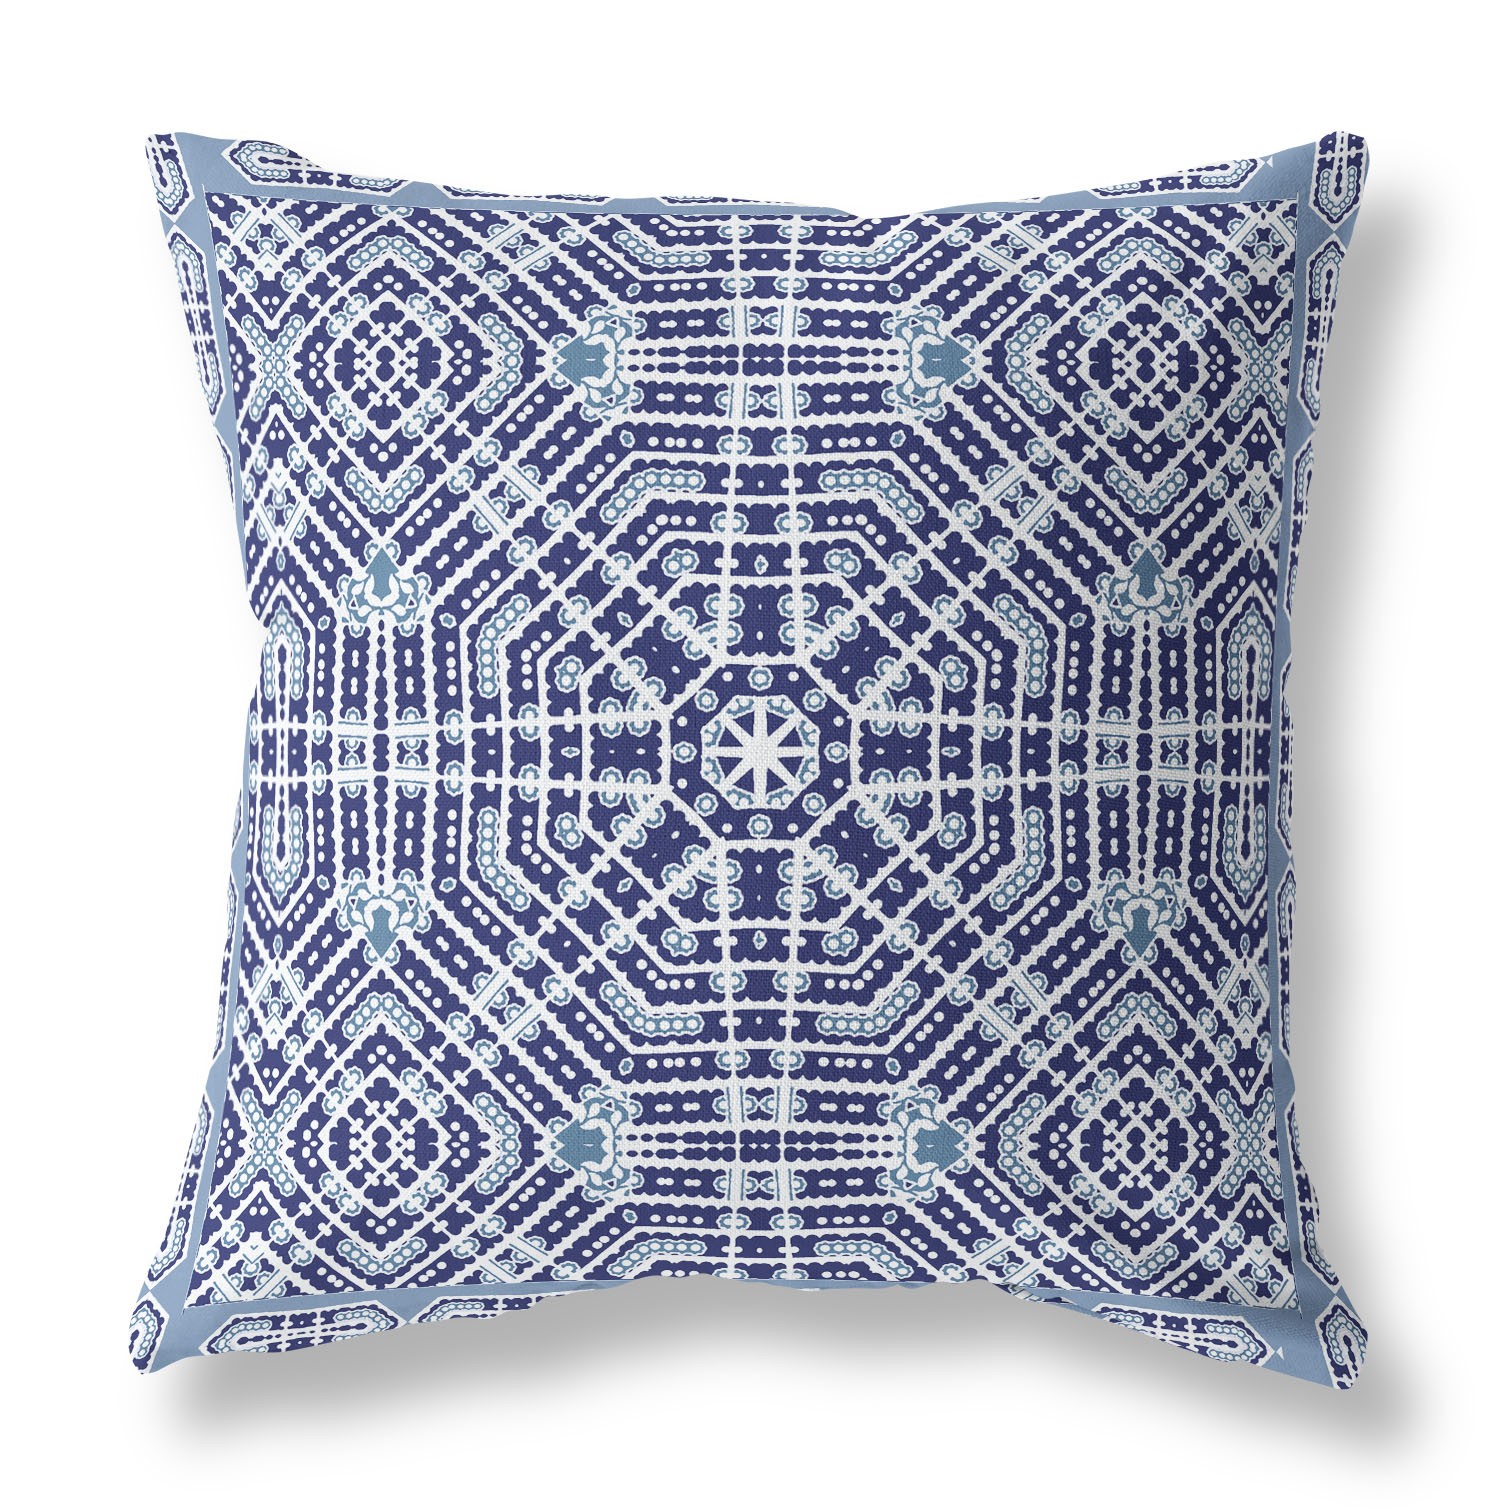 20” Indigo Blue Geostar Indoor Outdoor Throw Pillow-415026-1